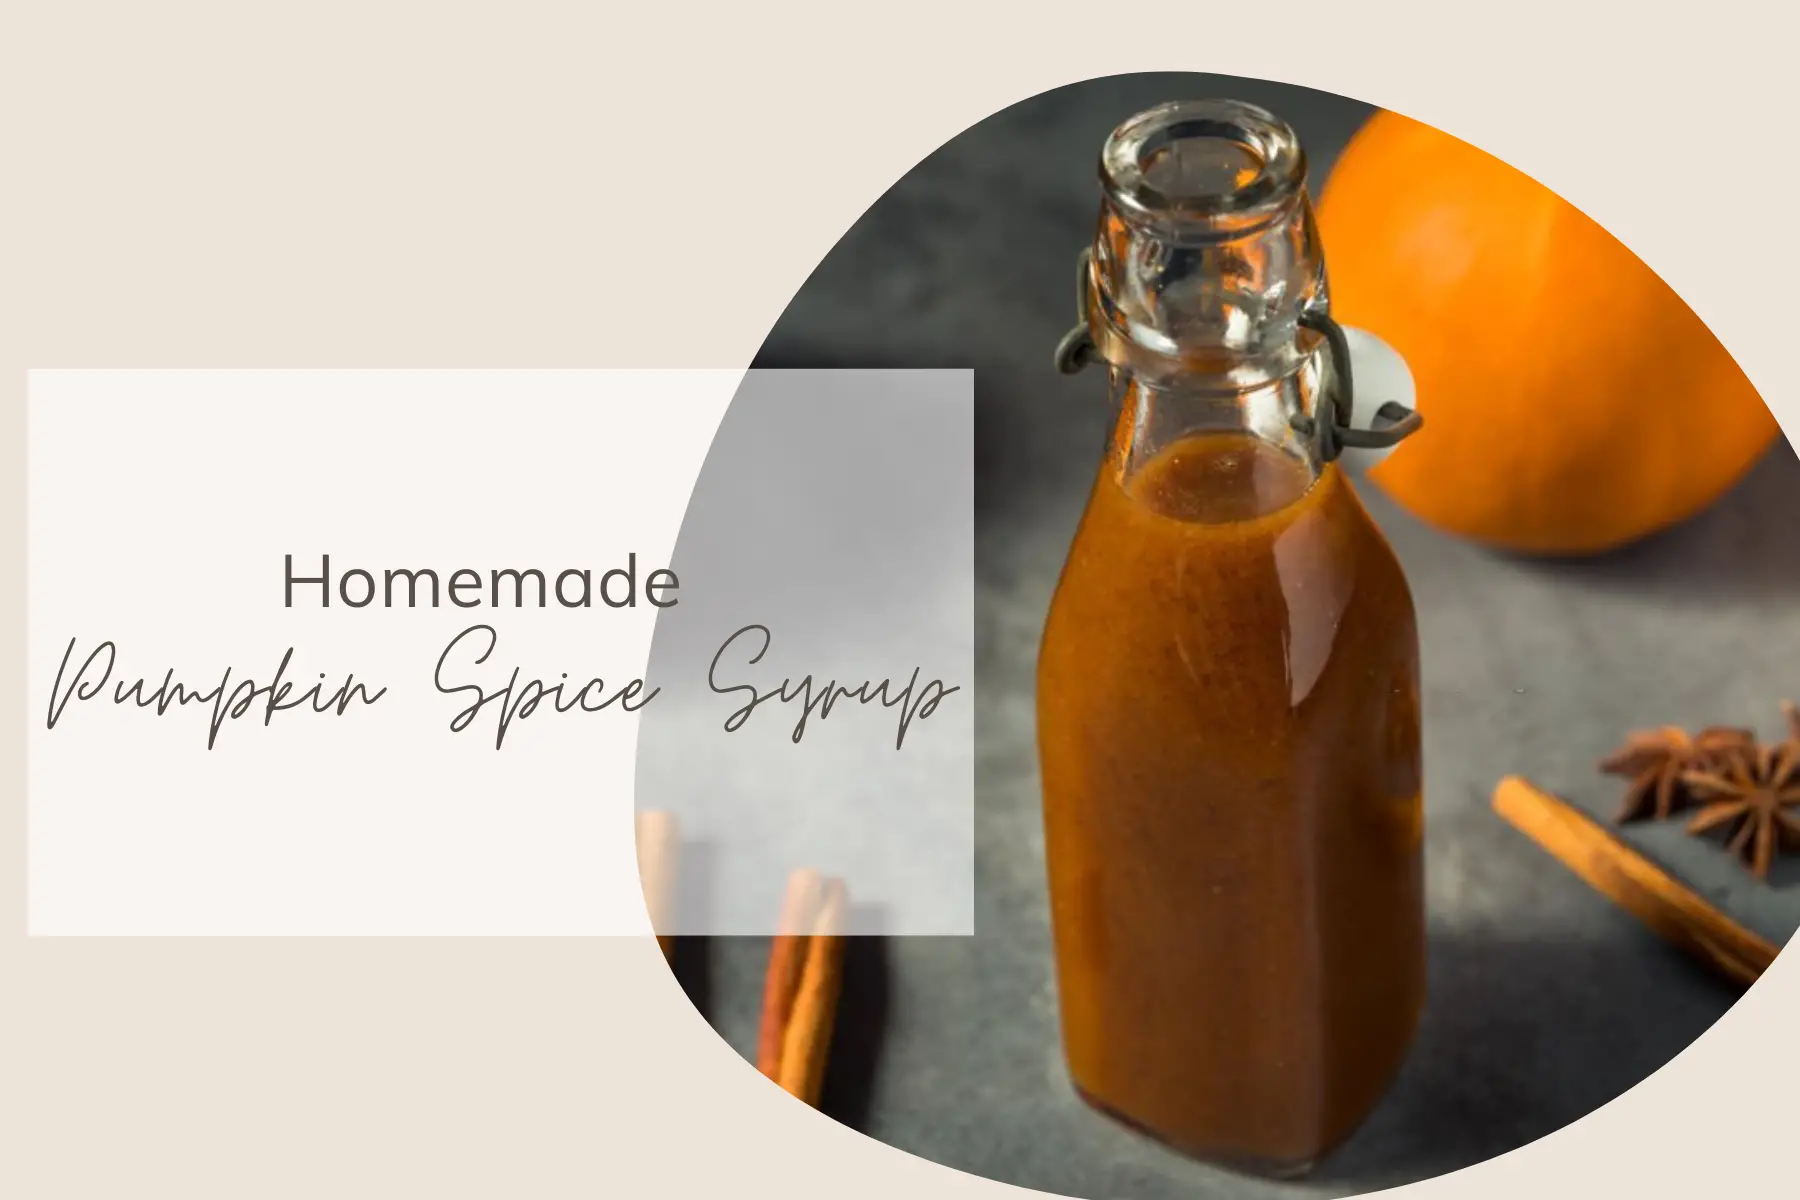 Homemade Pumpkin Pie Spice Syrup